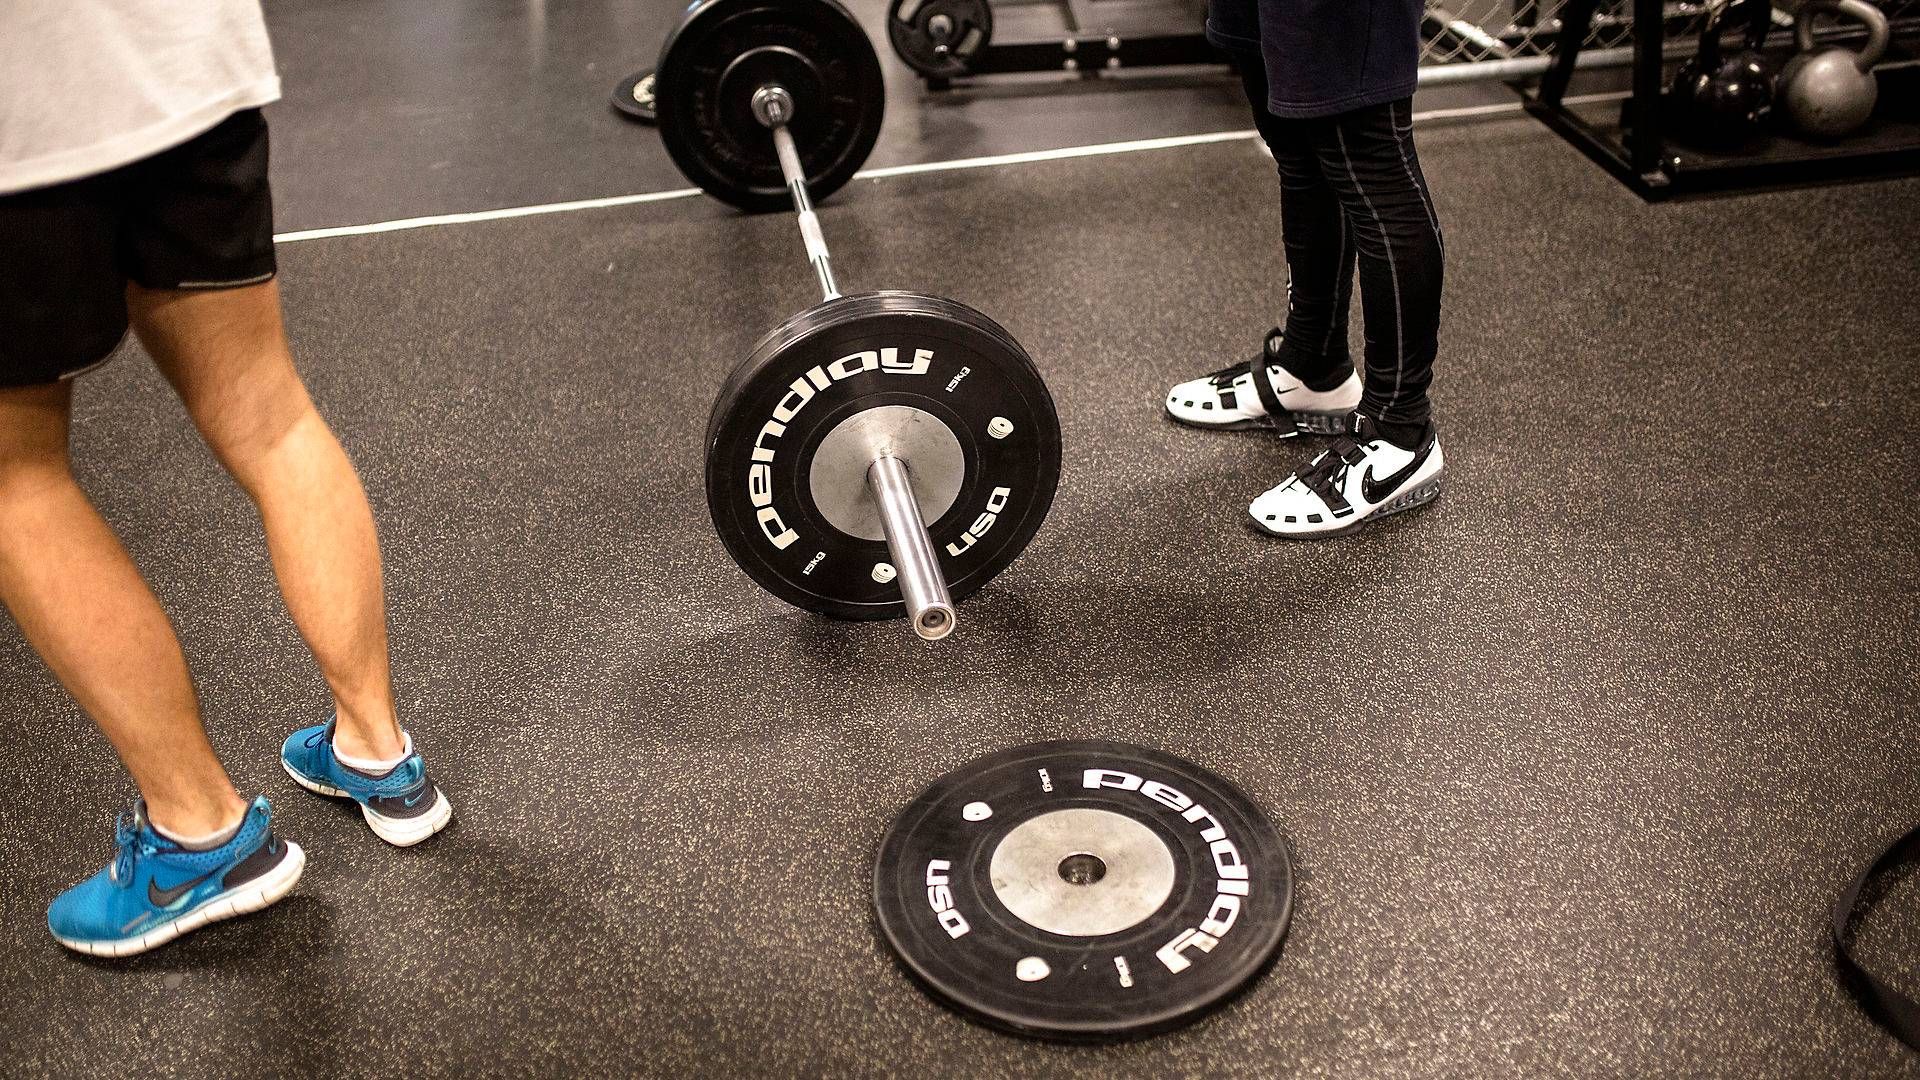 Der kan på ny løftes vægte i landets fitnesscentre efter ny genåbningsaftale. | Foto: Ivan Riordan Boll/Politiken/Ritzau Scanpix